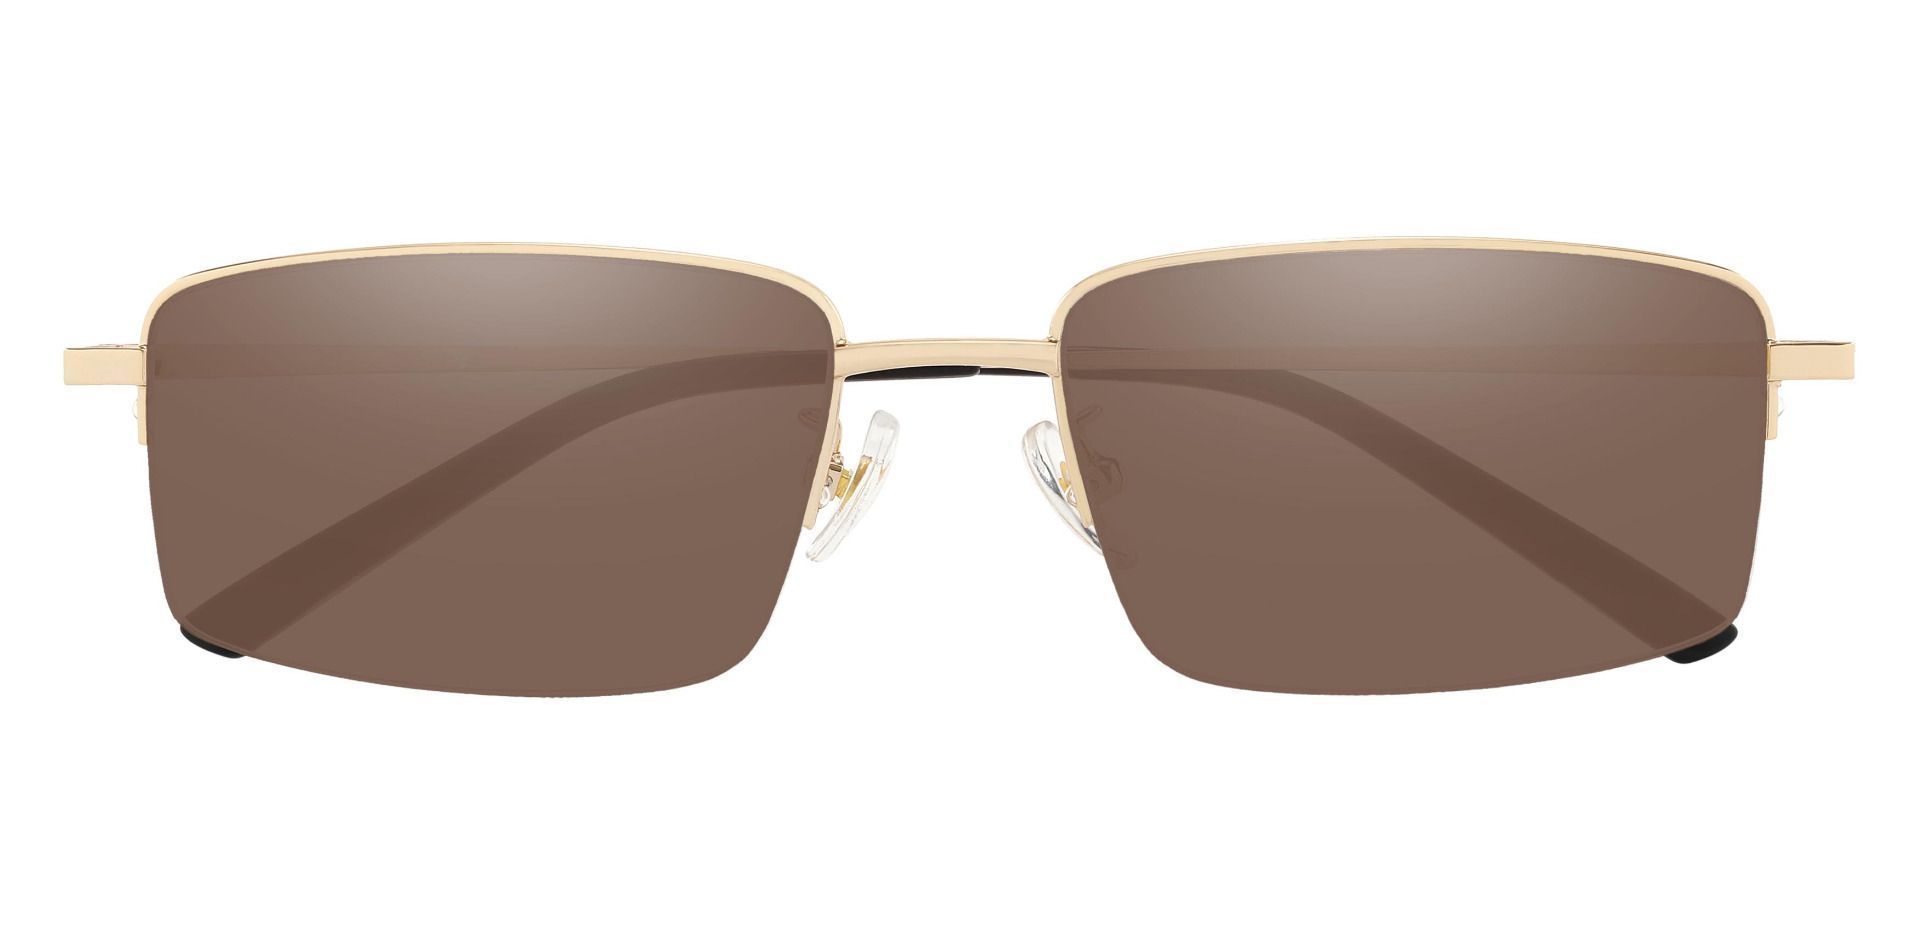 Wayne Rectangle Progressive Sunglasses - Gold Frame With Brown Lenses